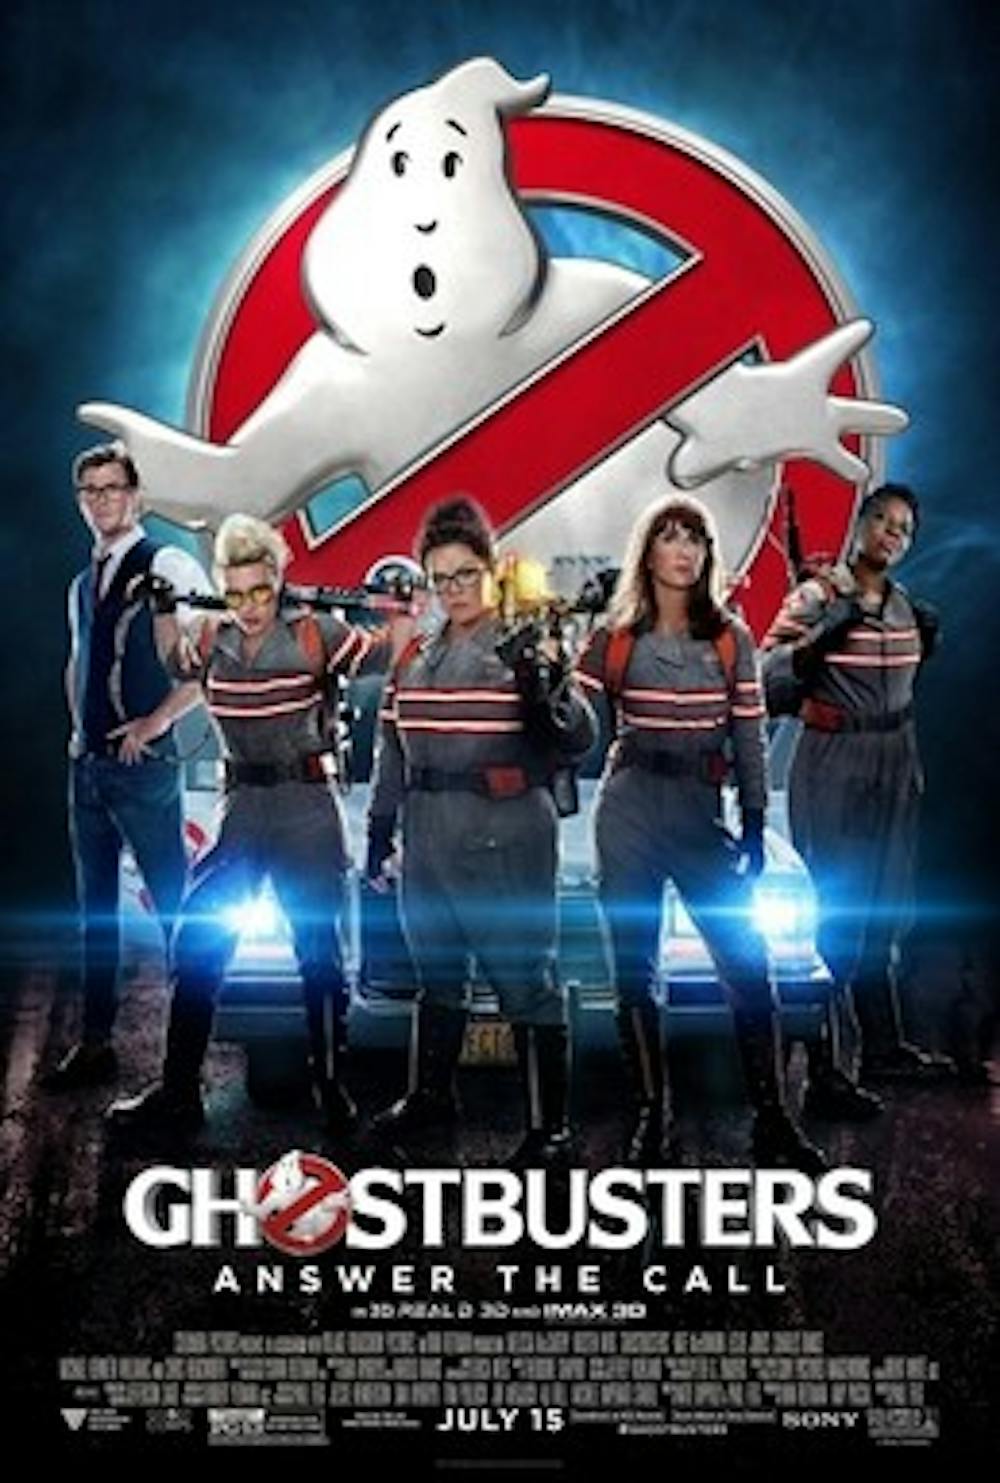 <p>"Ghostbusters," the all-female reboot, stars Kristen Wiig, Melissa McCarthy, Kate McKinnon and Leslie Jones.&nbsp;</p>